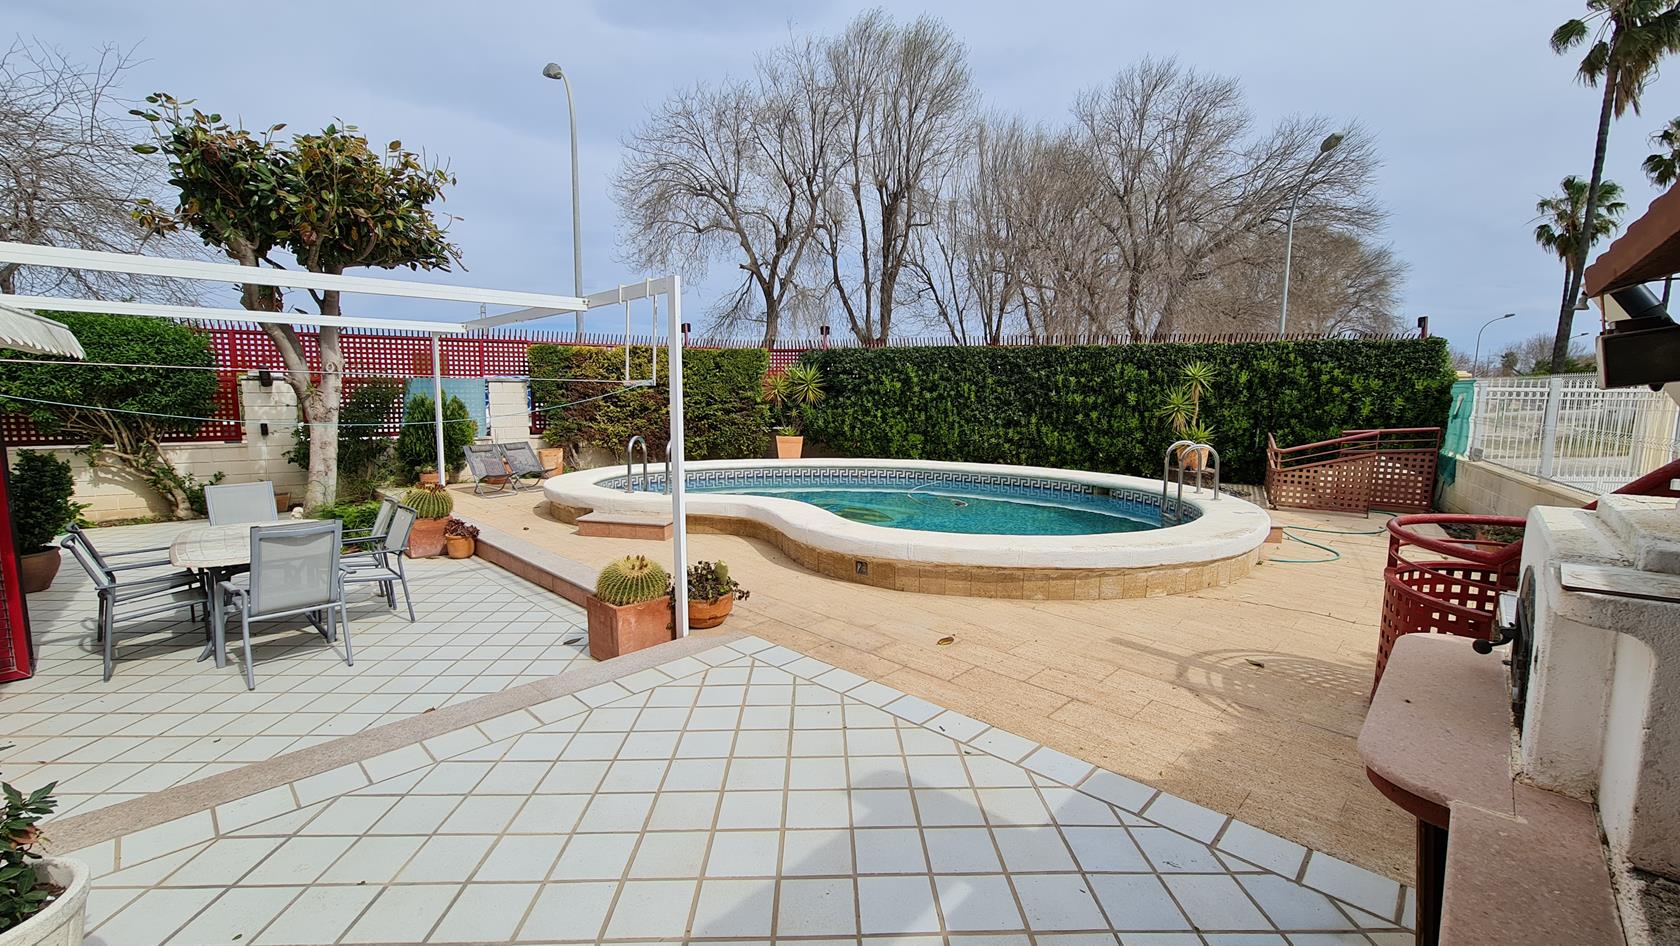 Fantastique villa individuelle avec piscine, jardin, garage....